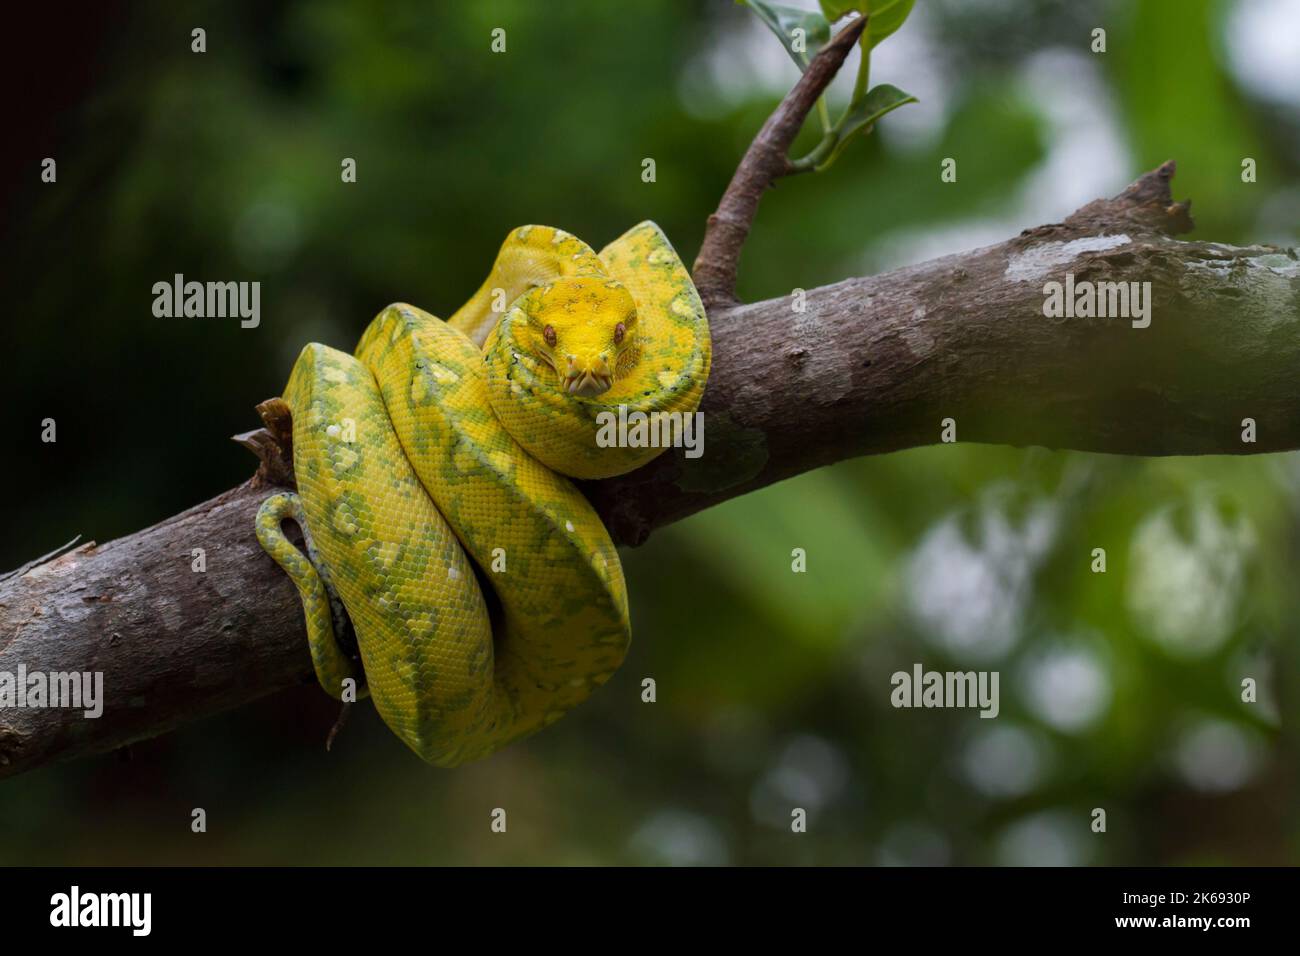 Green Tree Python Morelia viridis on tree branch yellow color skin snake Stock Photo